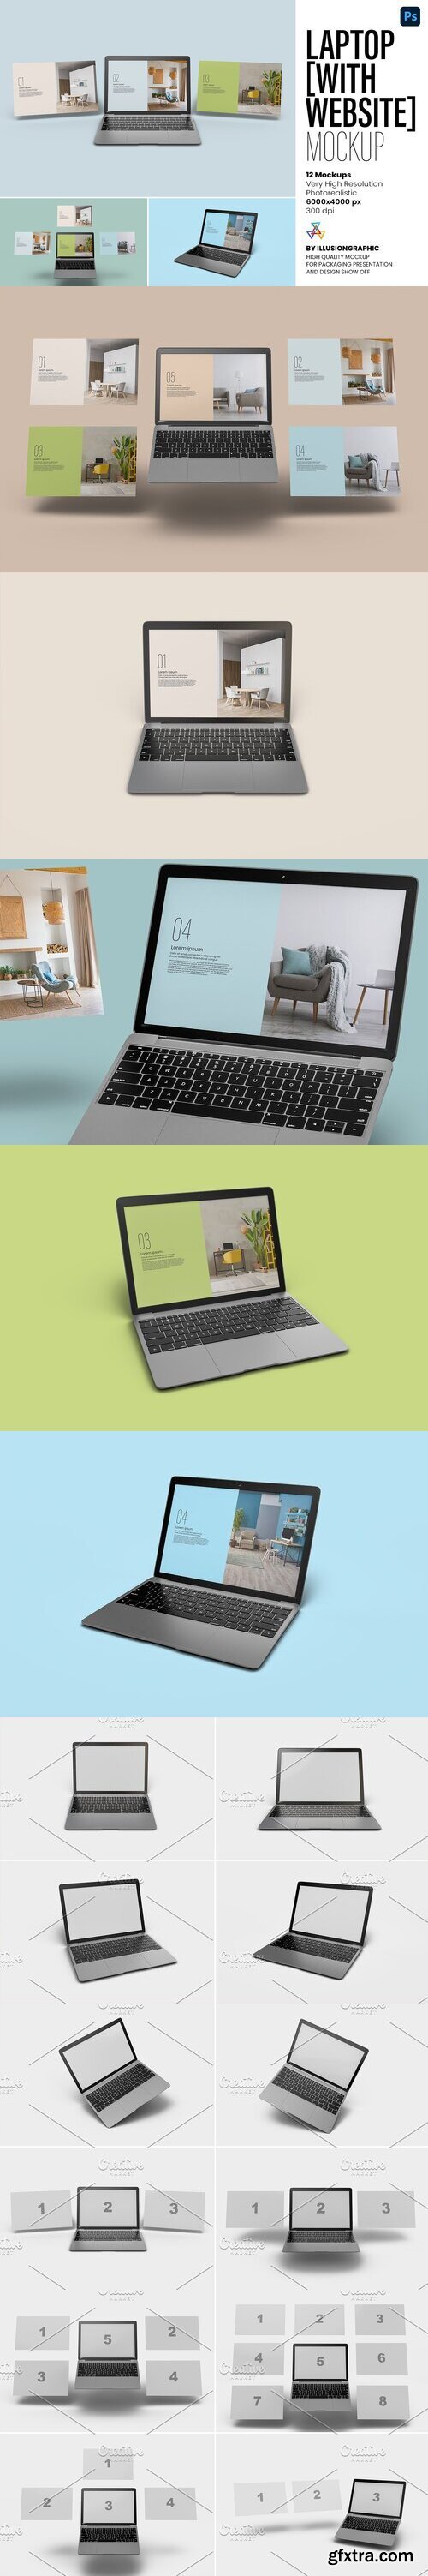 CreativeMarket - Laptop with Website Mockup 12 views 7536361